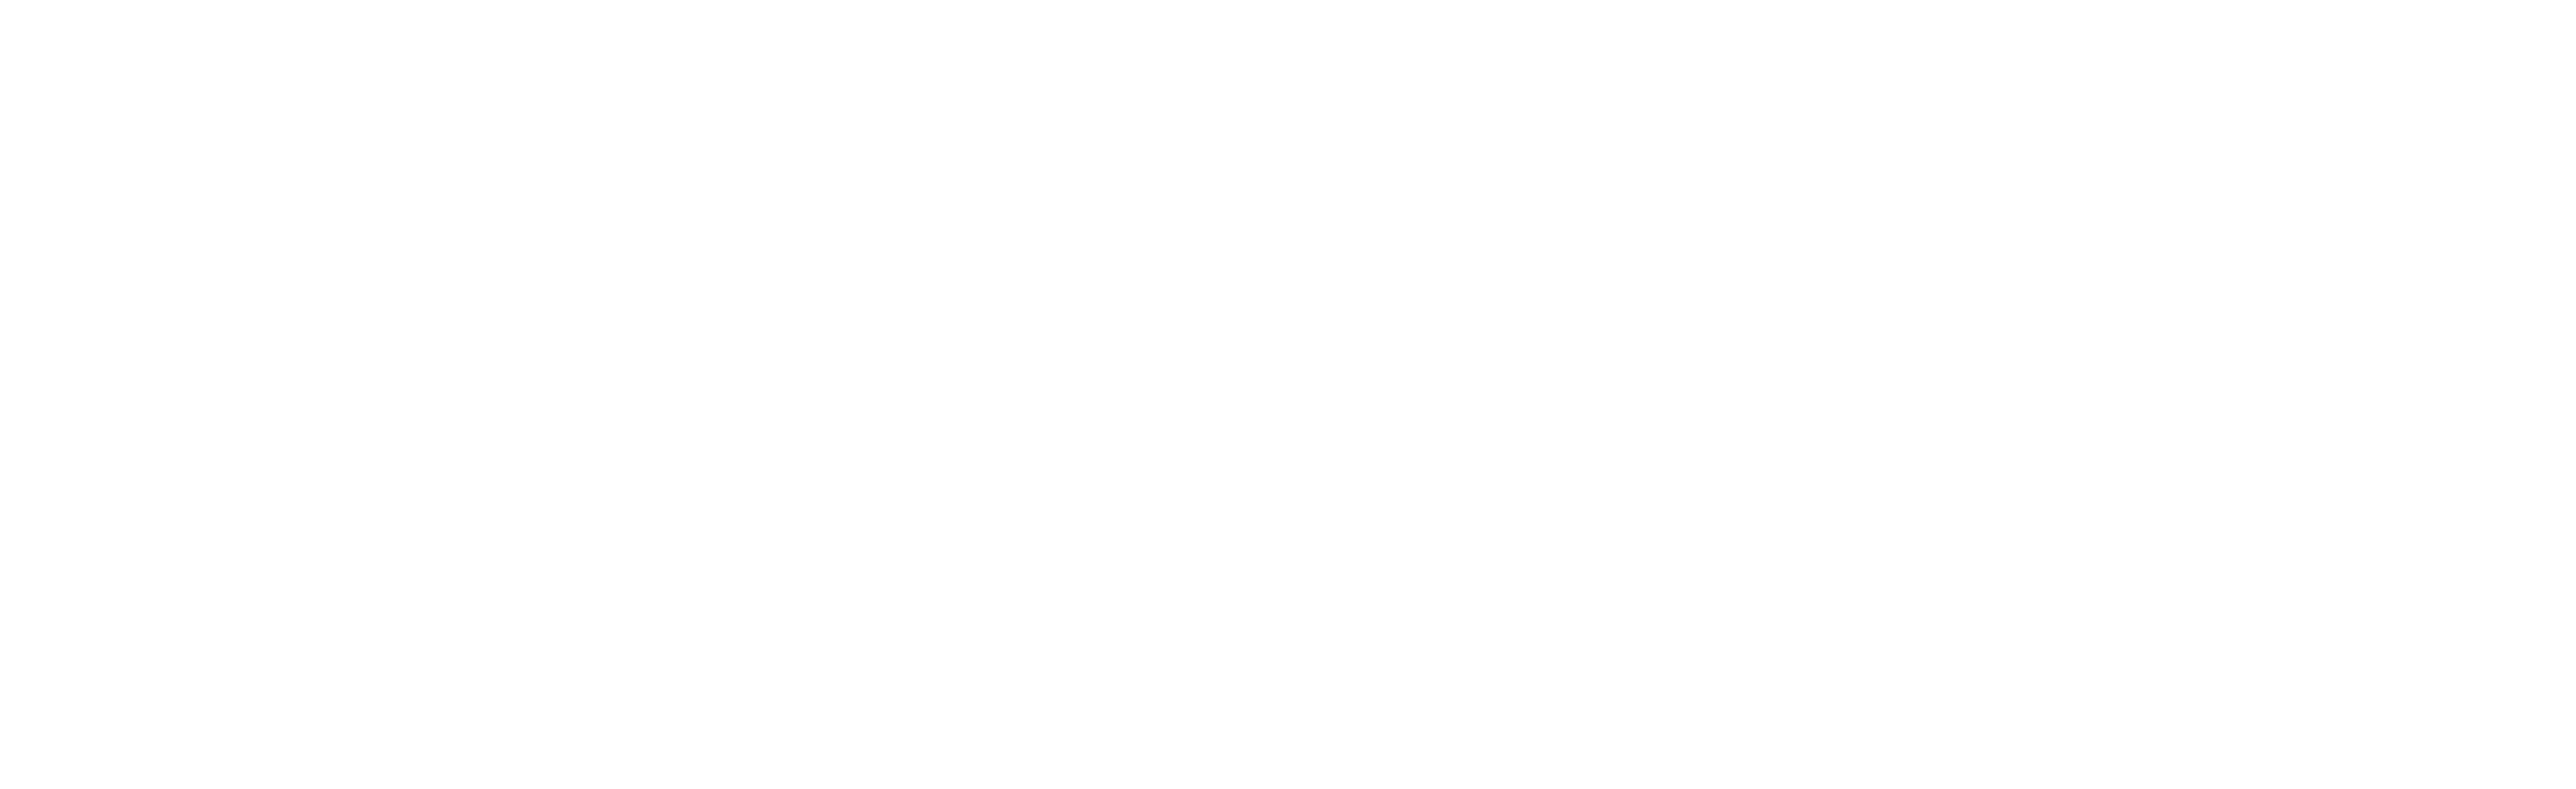 Grant Cottrell, PLLC